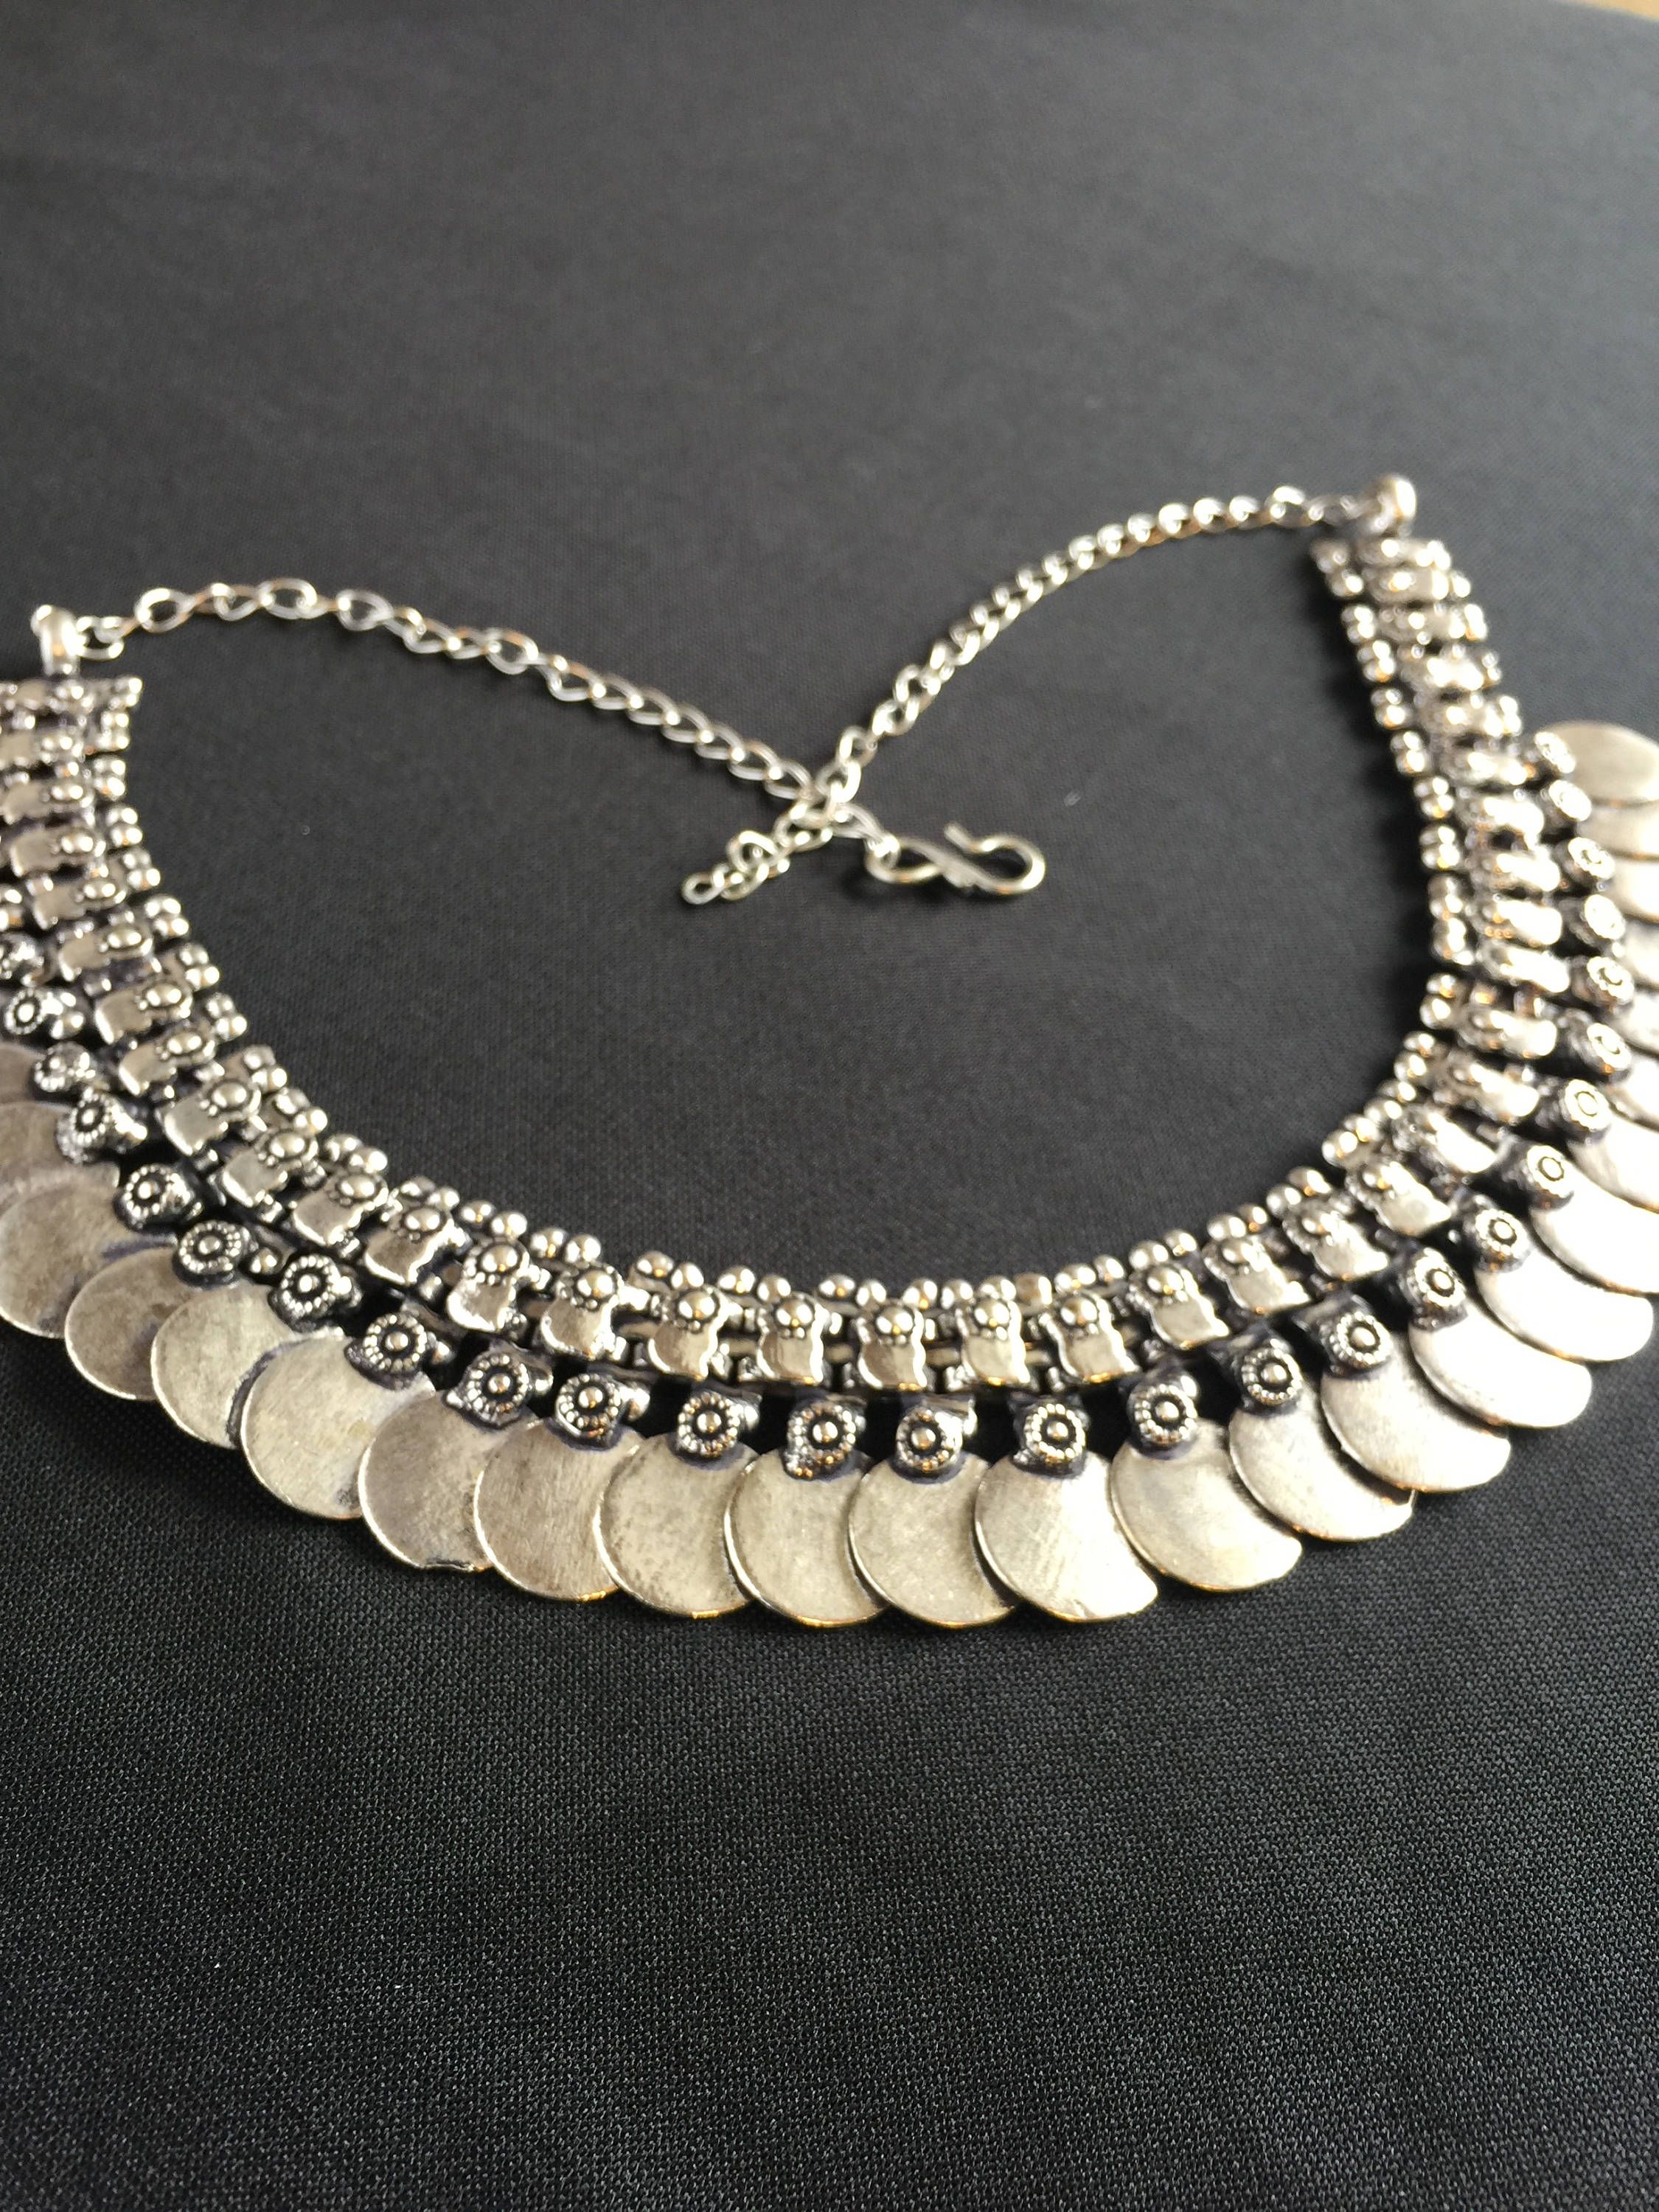 Antique silver coin necklace, statement necklace, kaasu maala ...